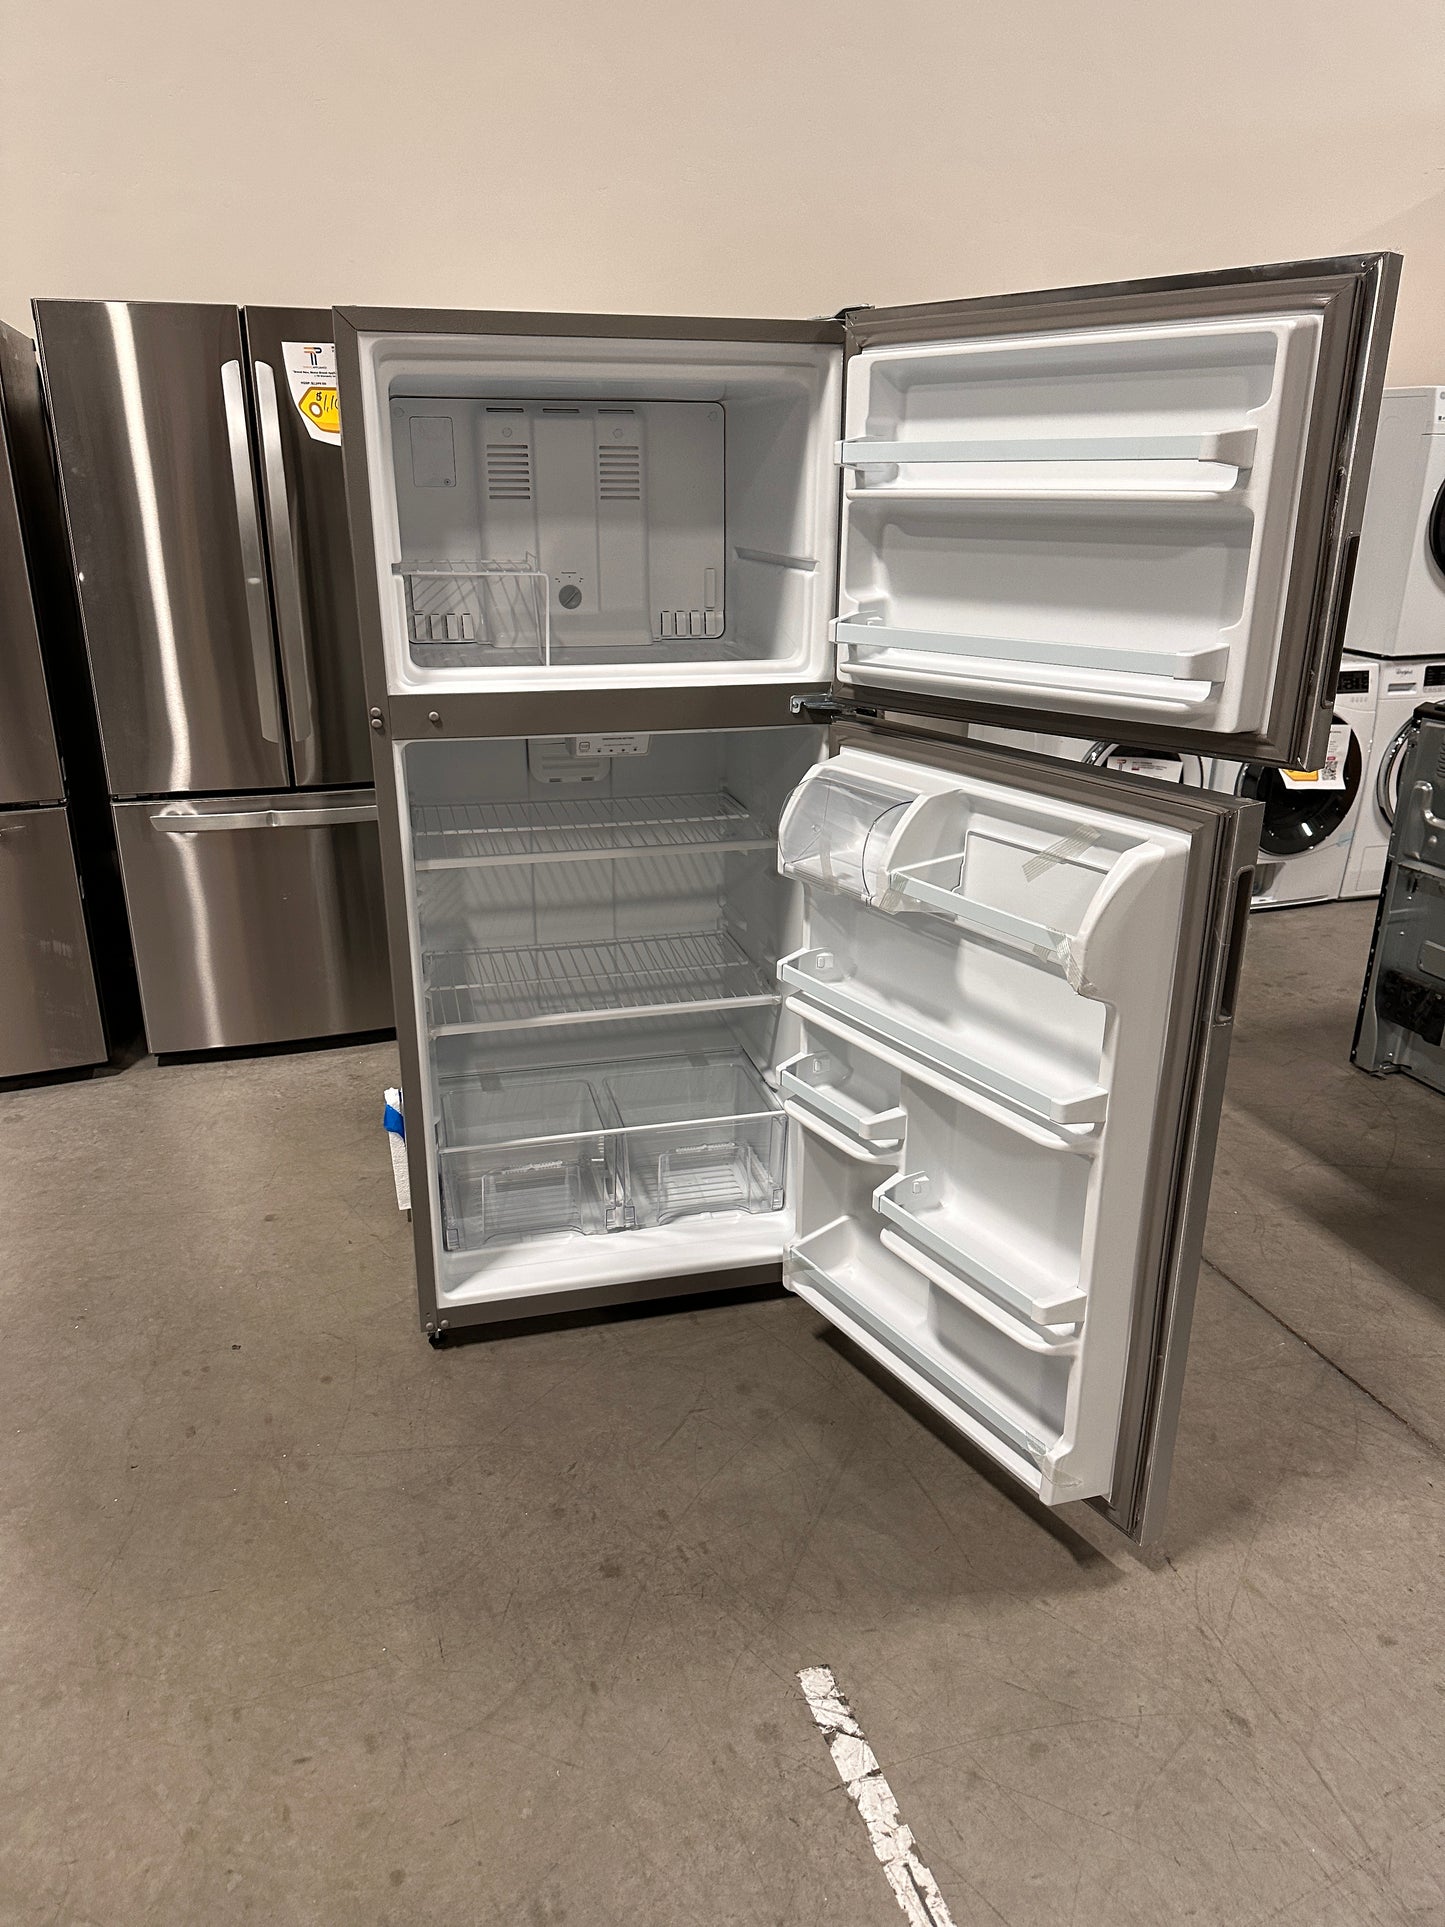 Amana 18.2-cu ft Top-Freezer Refrigerator (Stainless Steel)  MODEL: ART308FFDM  REF13038